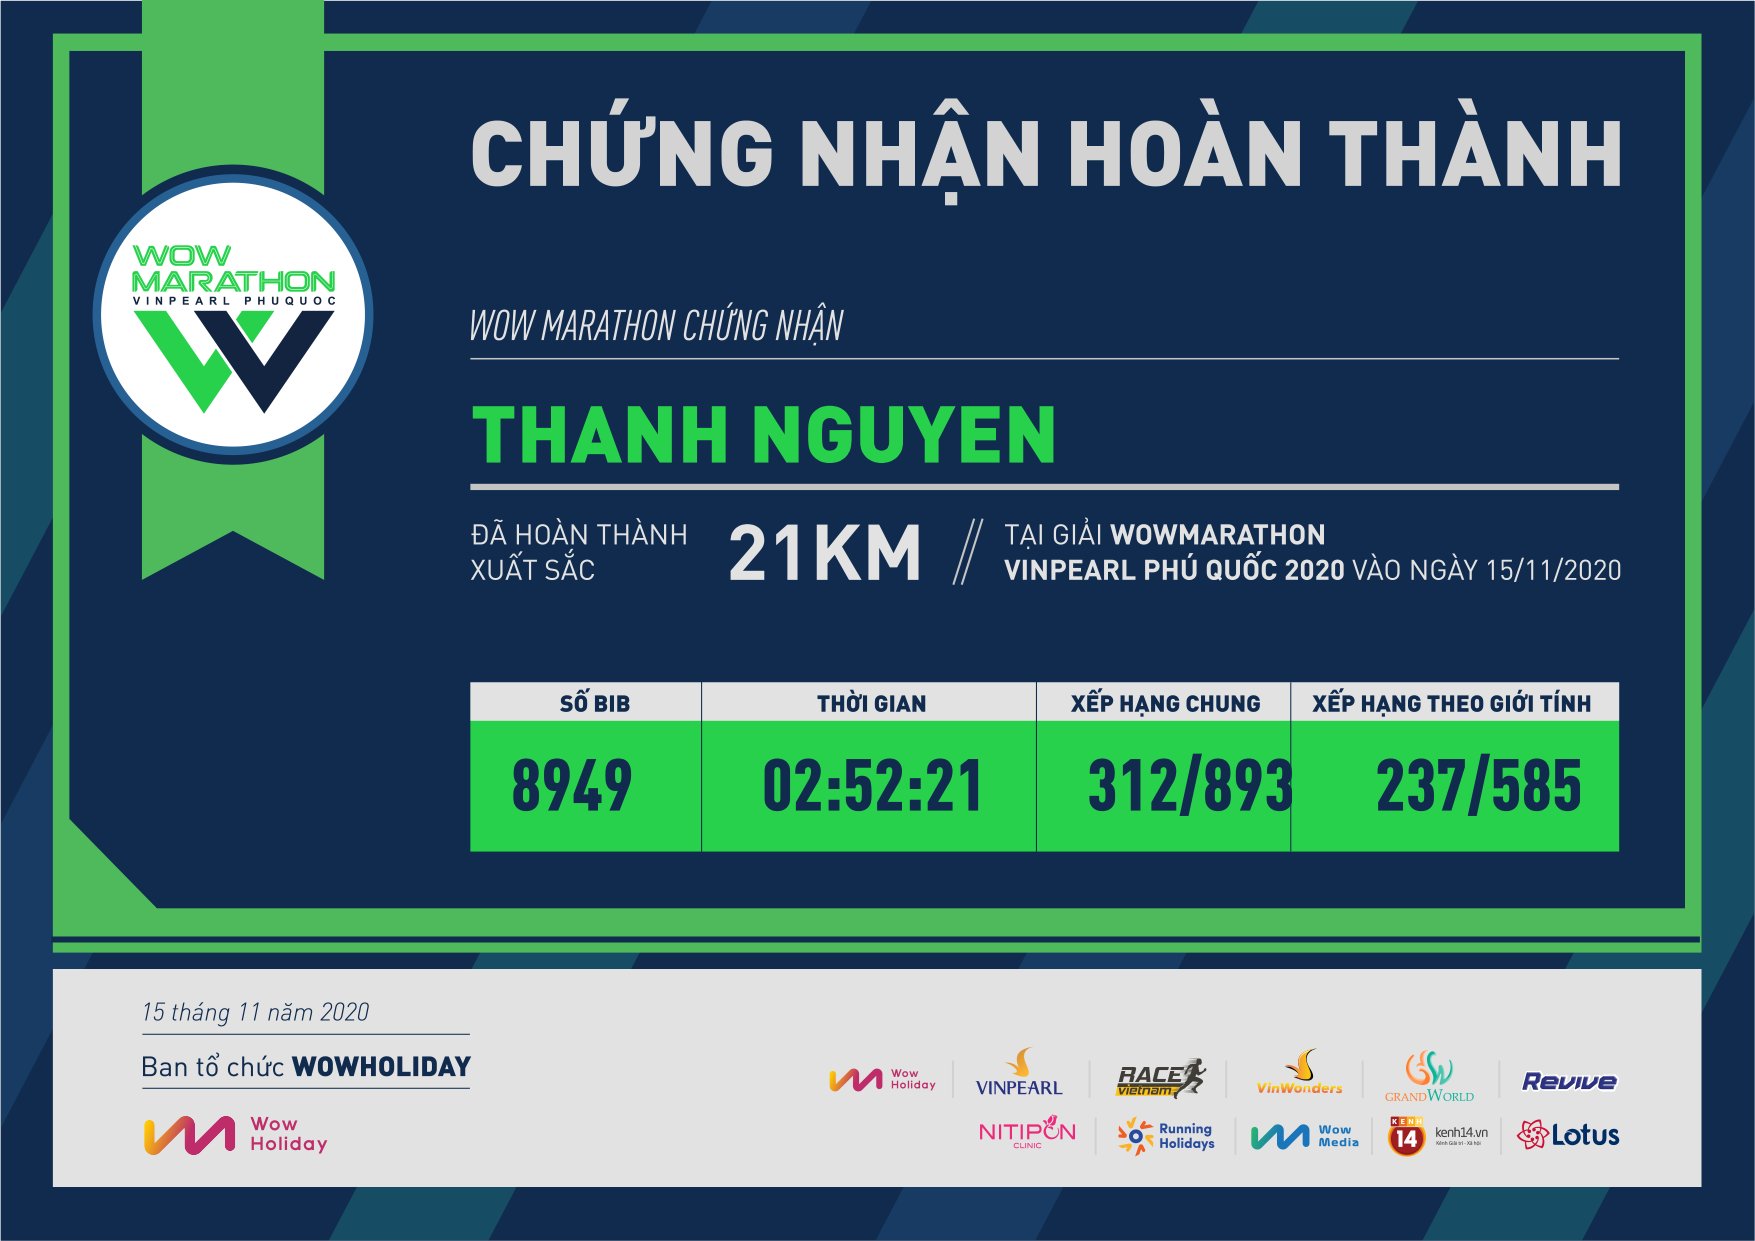 8949 - Thanh Nguyen